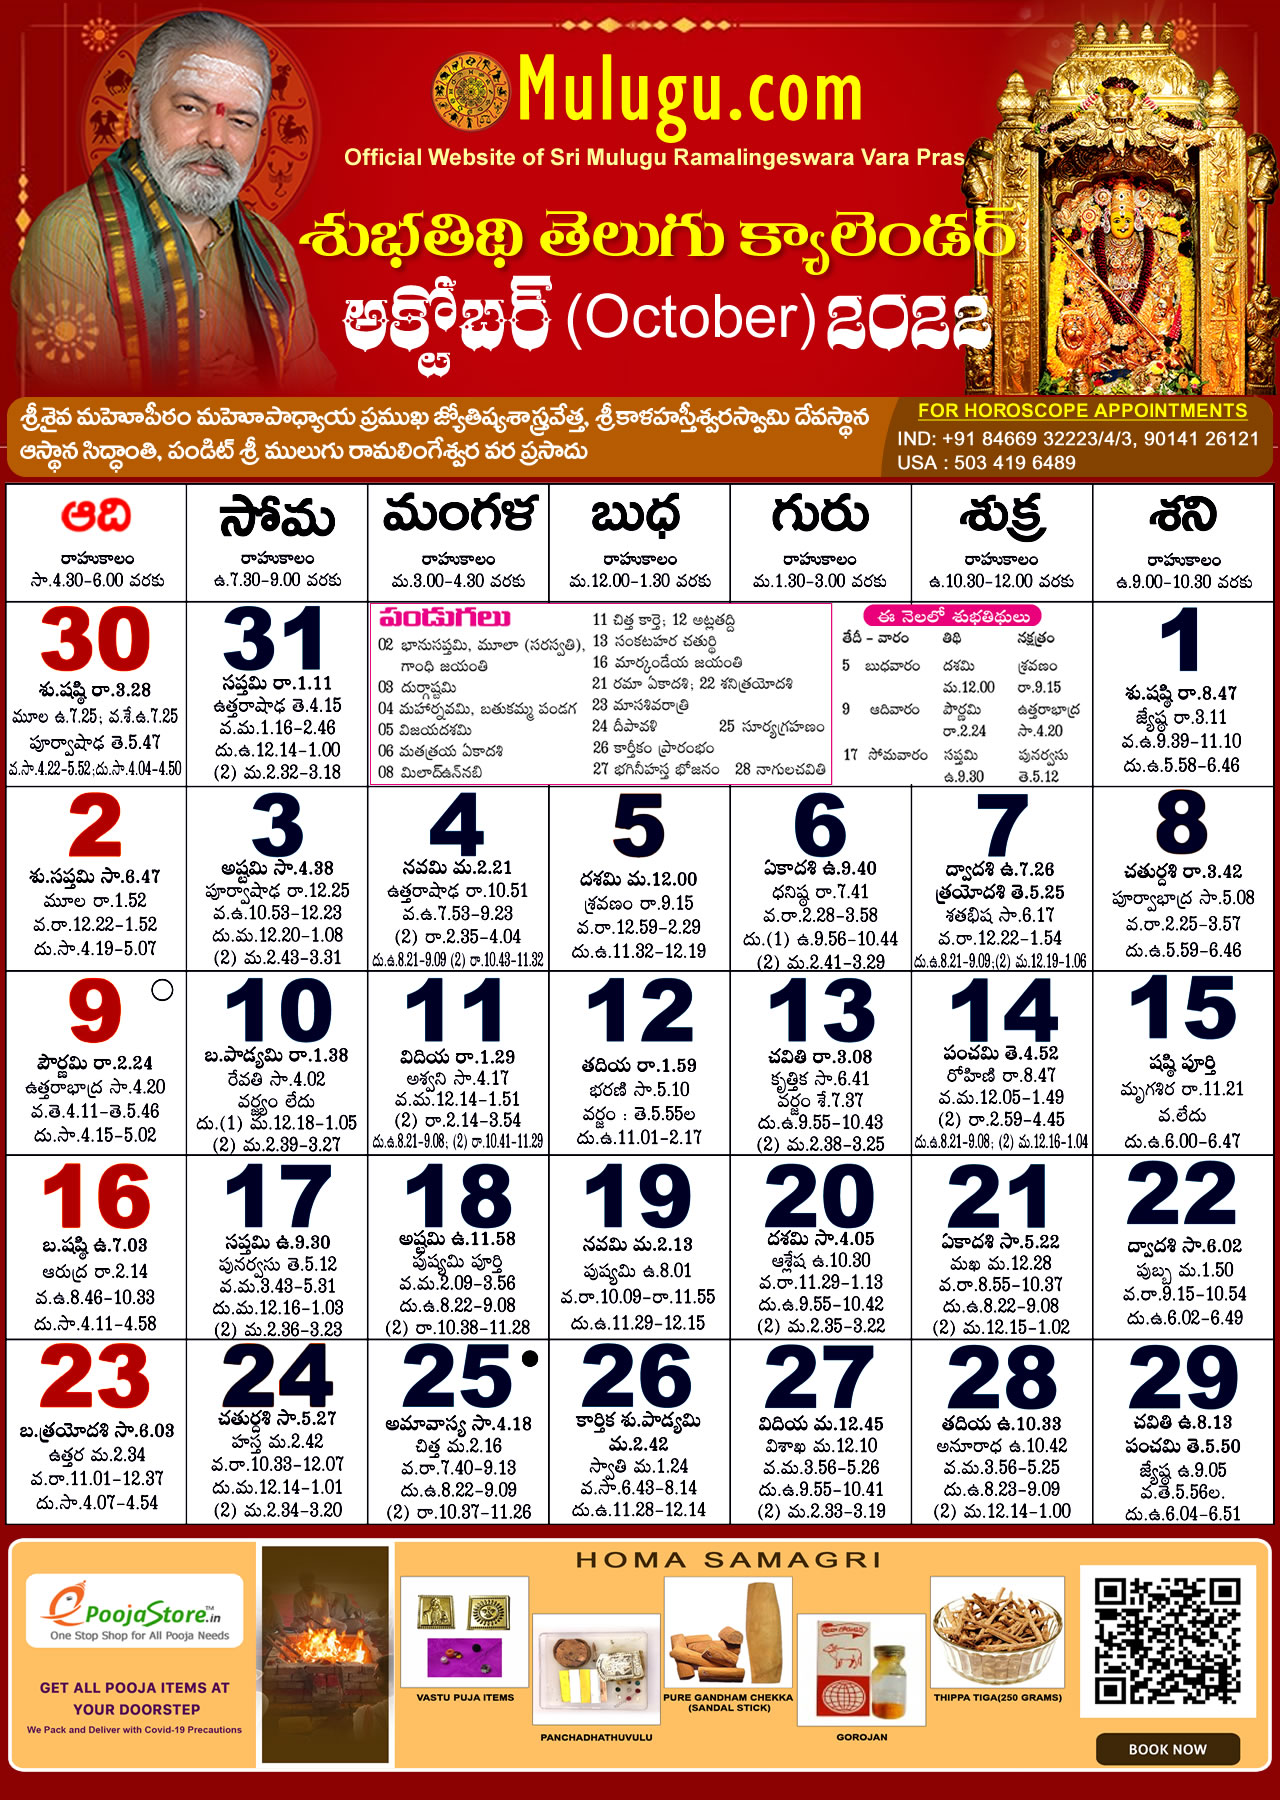 October Telugu Calendar 2022 Subhathidi October Telugu Calendar 2022 | Telugu Calendar 2022 - 2023 |  Telugu Subhathidi Calendar 2022 | Calendar 2022 | Telugu Calendar 2022 |  Subhathidi Calendar 2022 | Chicago Calendar 2022 |